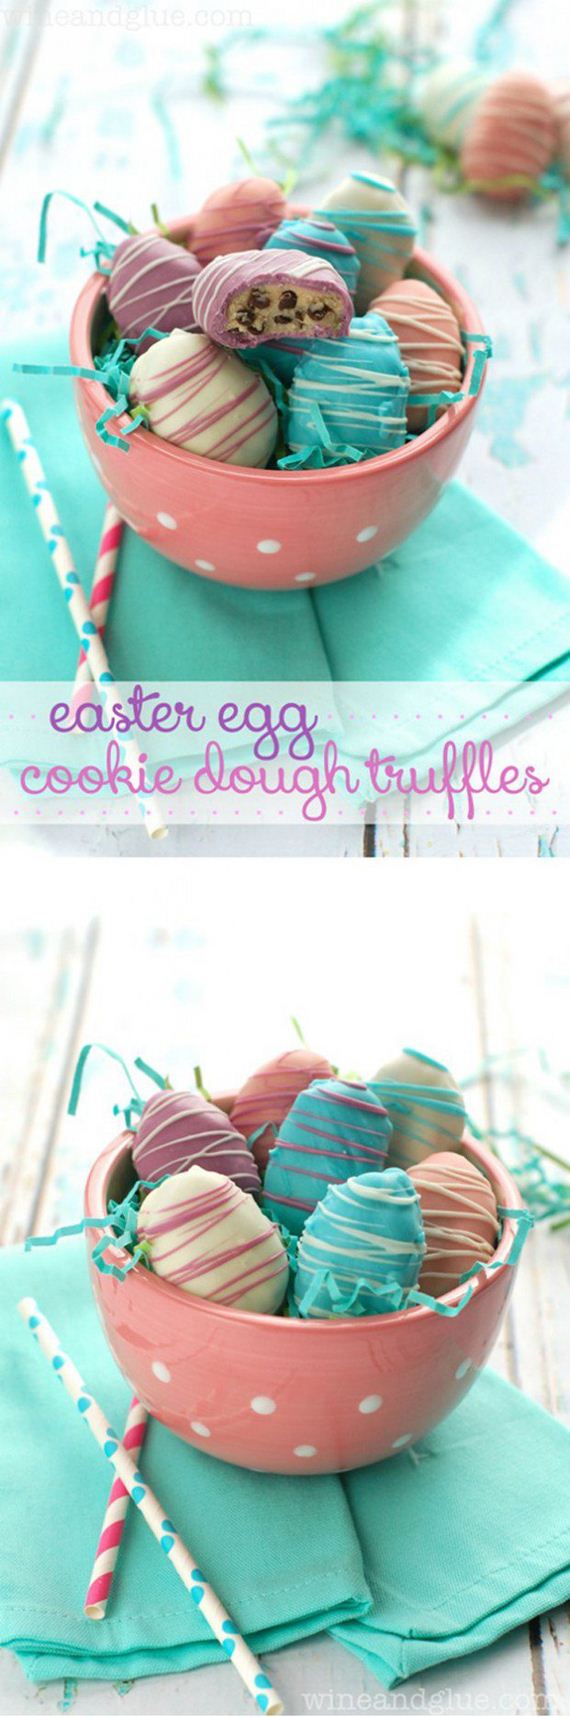 Easter Egg Cookie Dough Truffles.